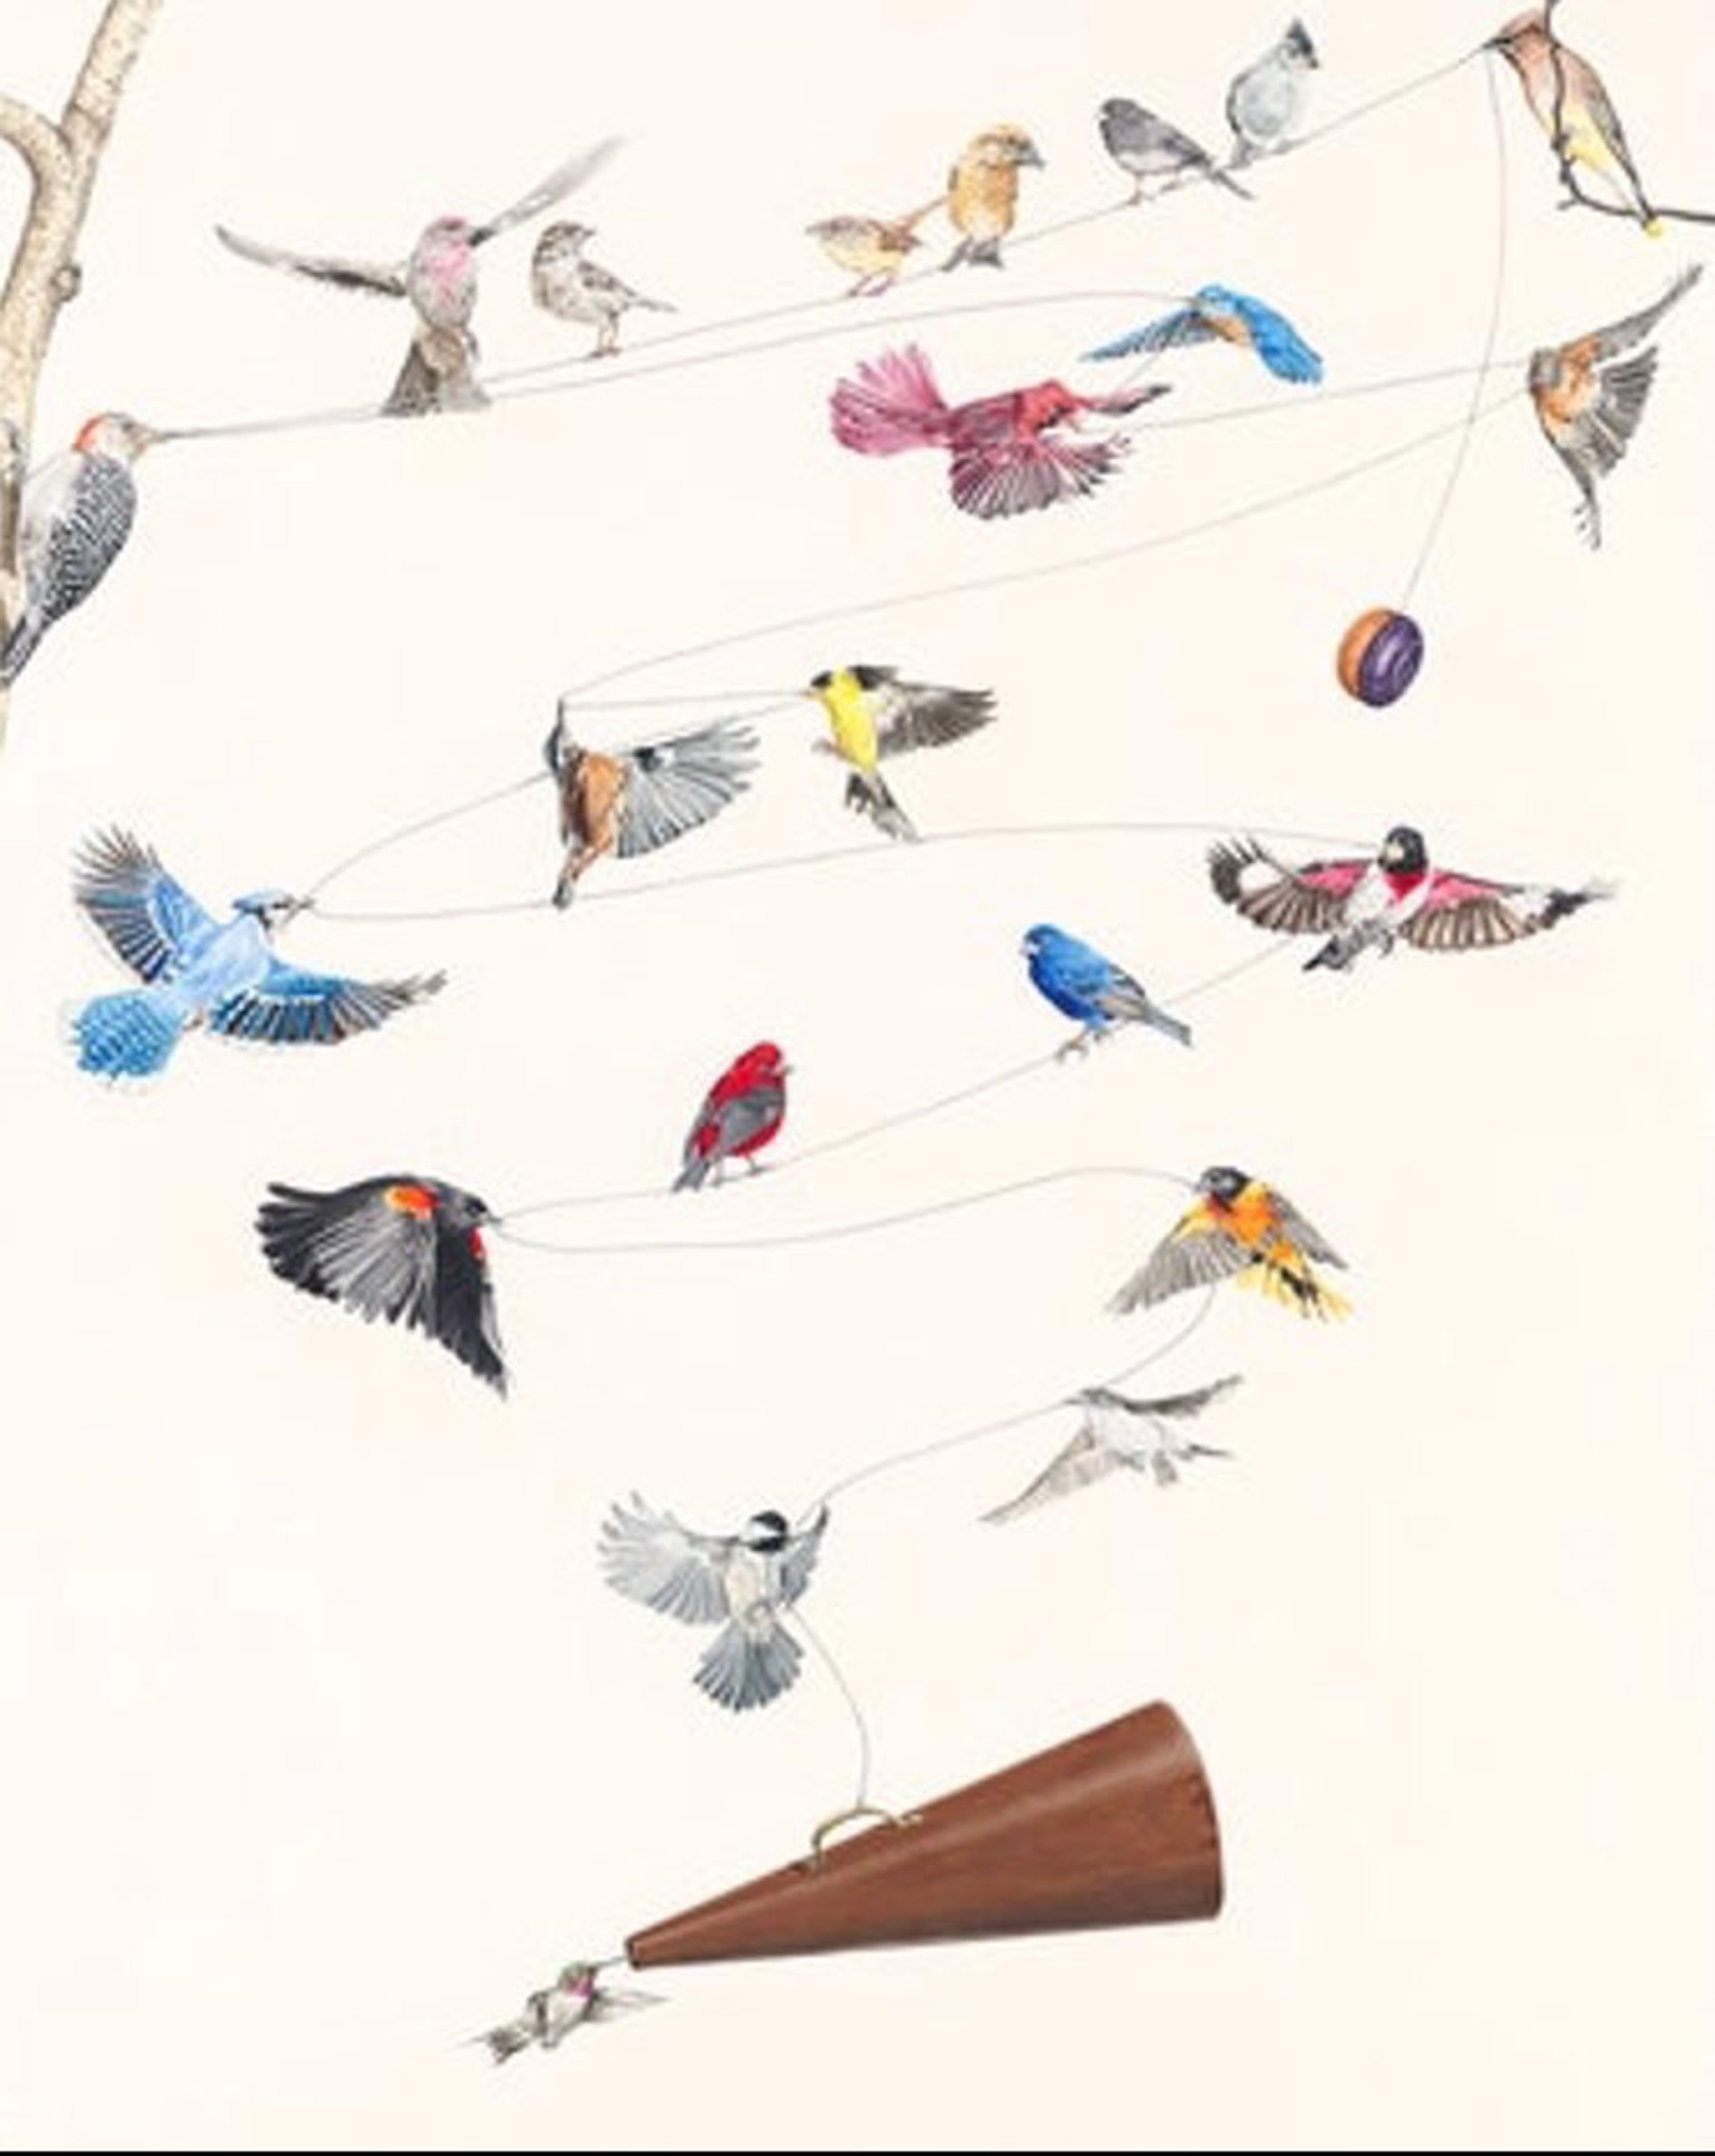 Four Calling Birds 3 - Song Birds 1/2 Size Unframed Print by Paul Van Heest